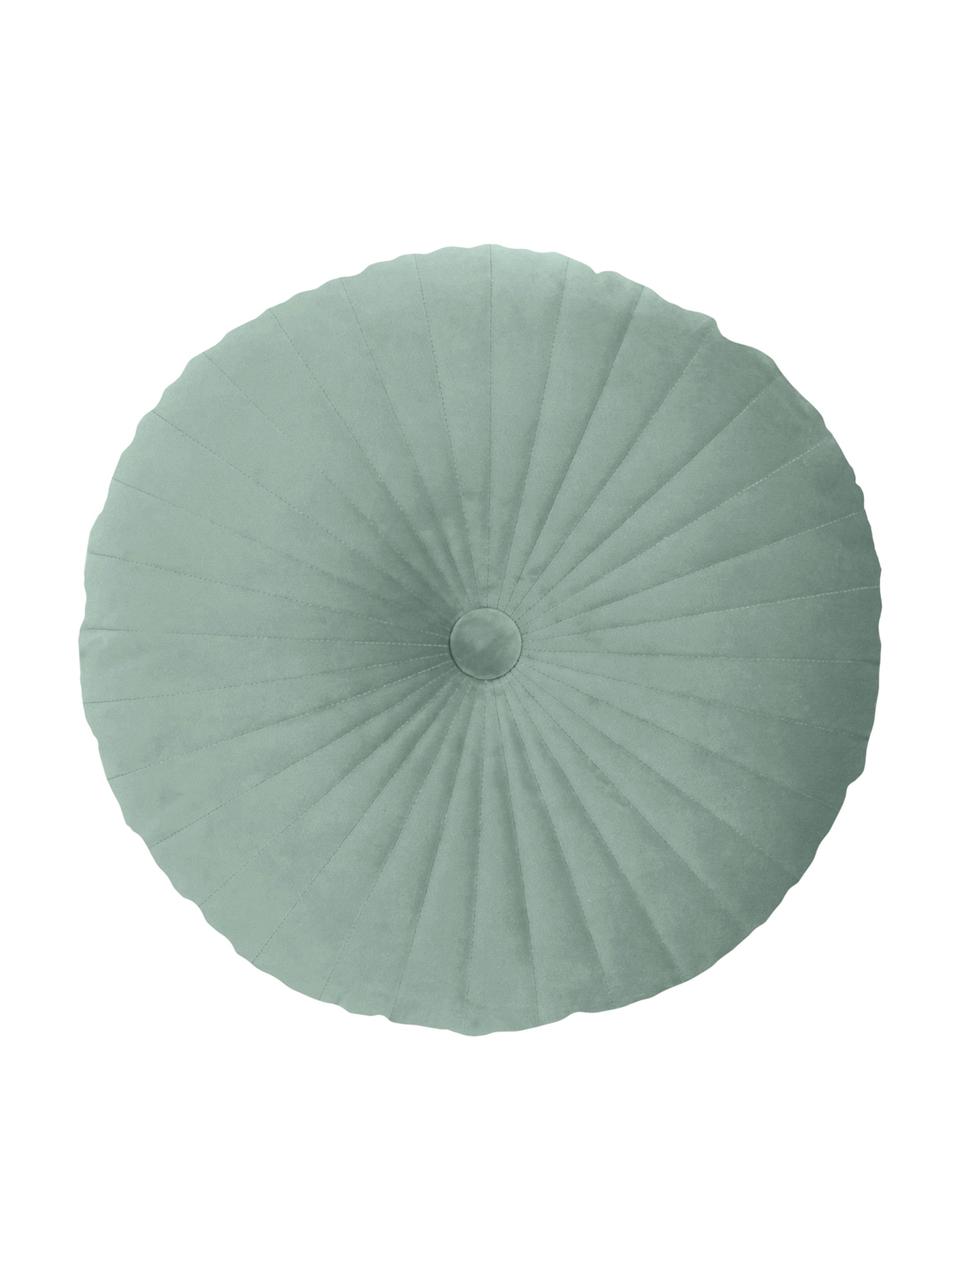 Rundes glänzendes Samt-Kissen Monet in Mintgrün, Bezug: 100% Polyestersamt, Mintgrün, Ø 40 cm